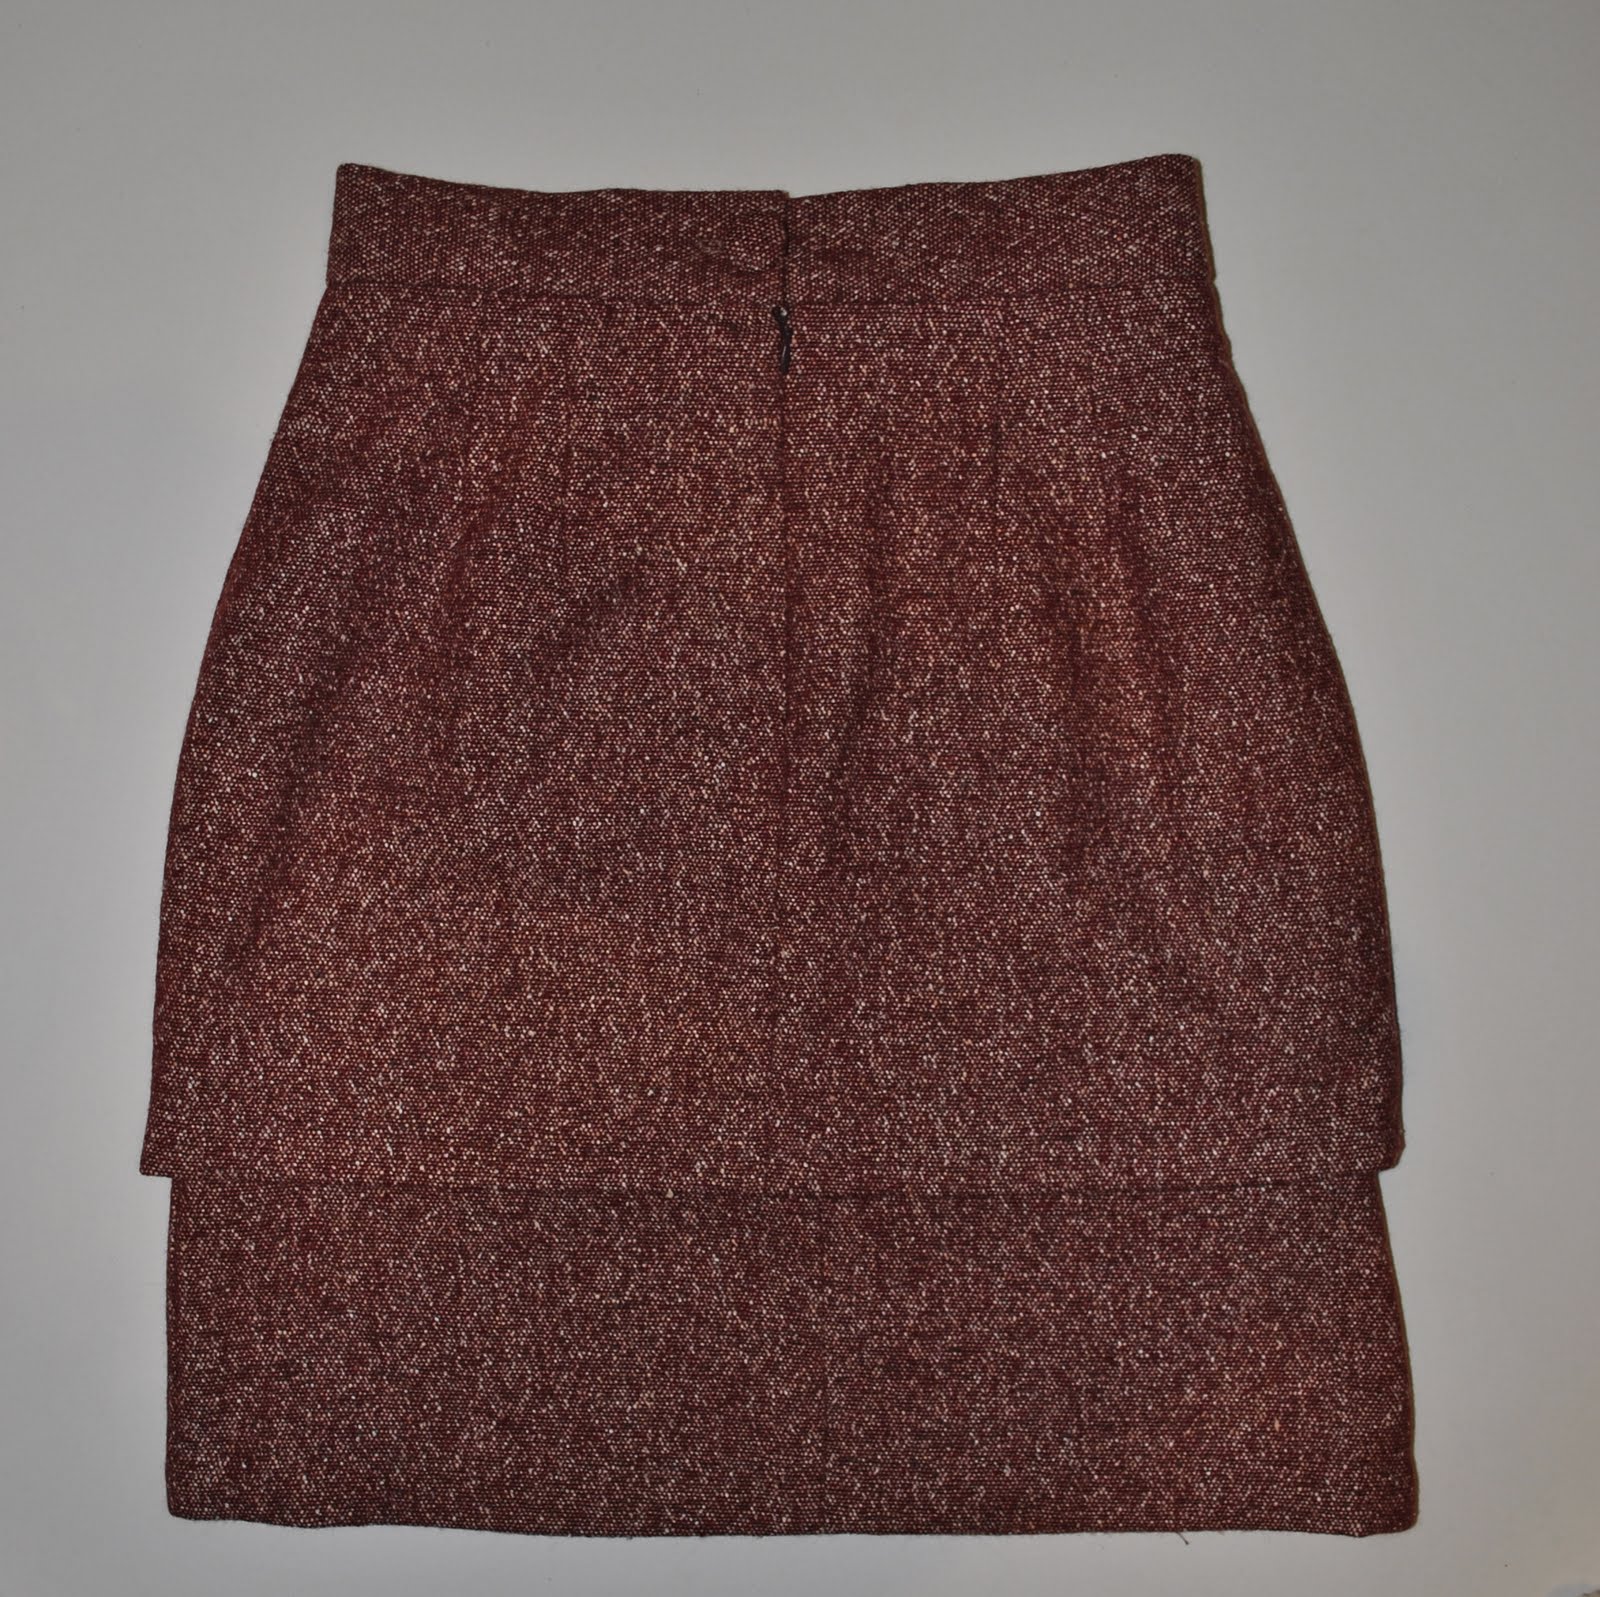 Handmade by Carolyn: Layered rusty-red wool skirt